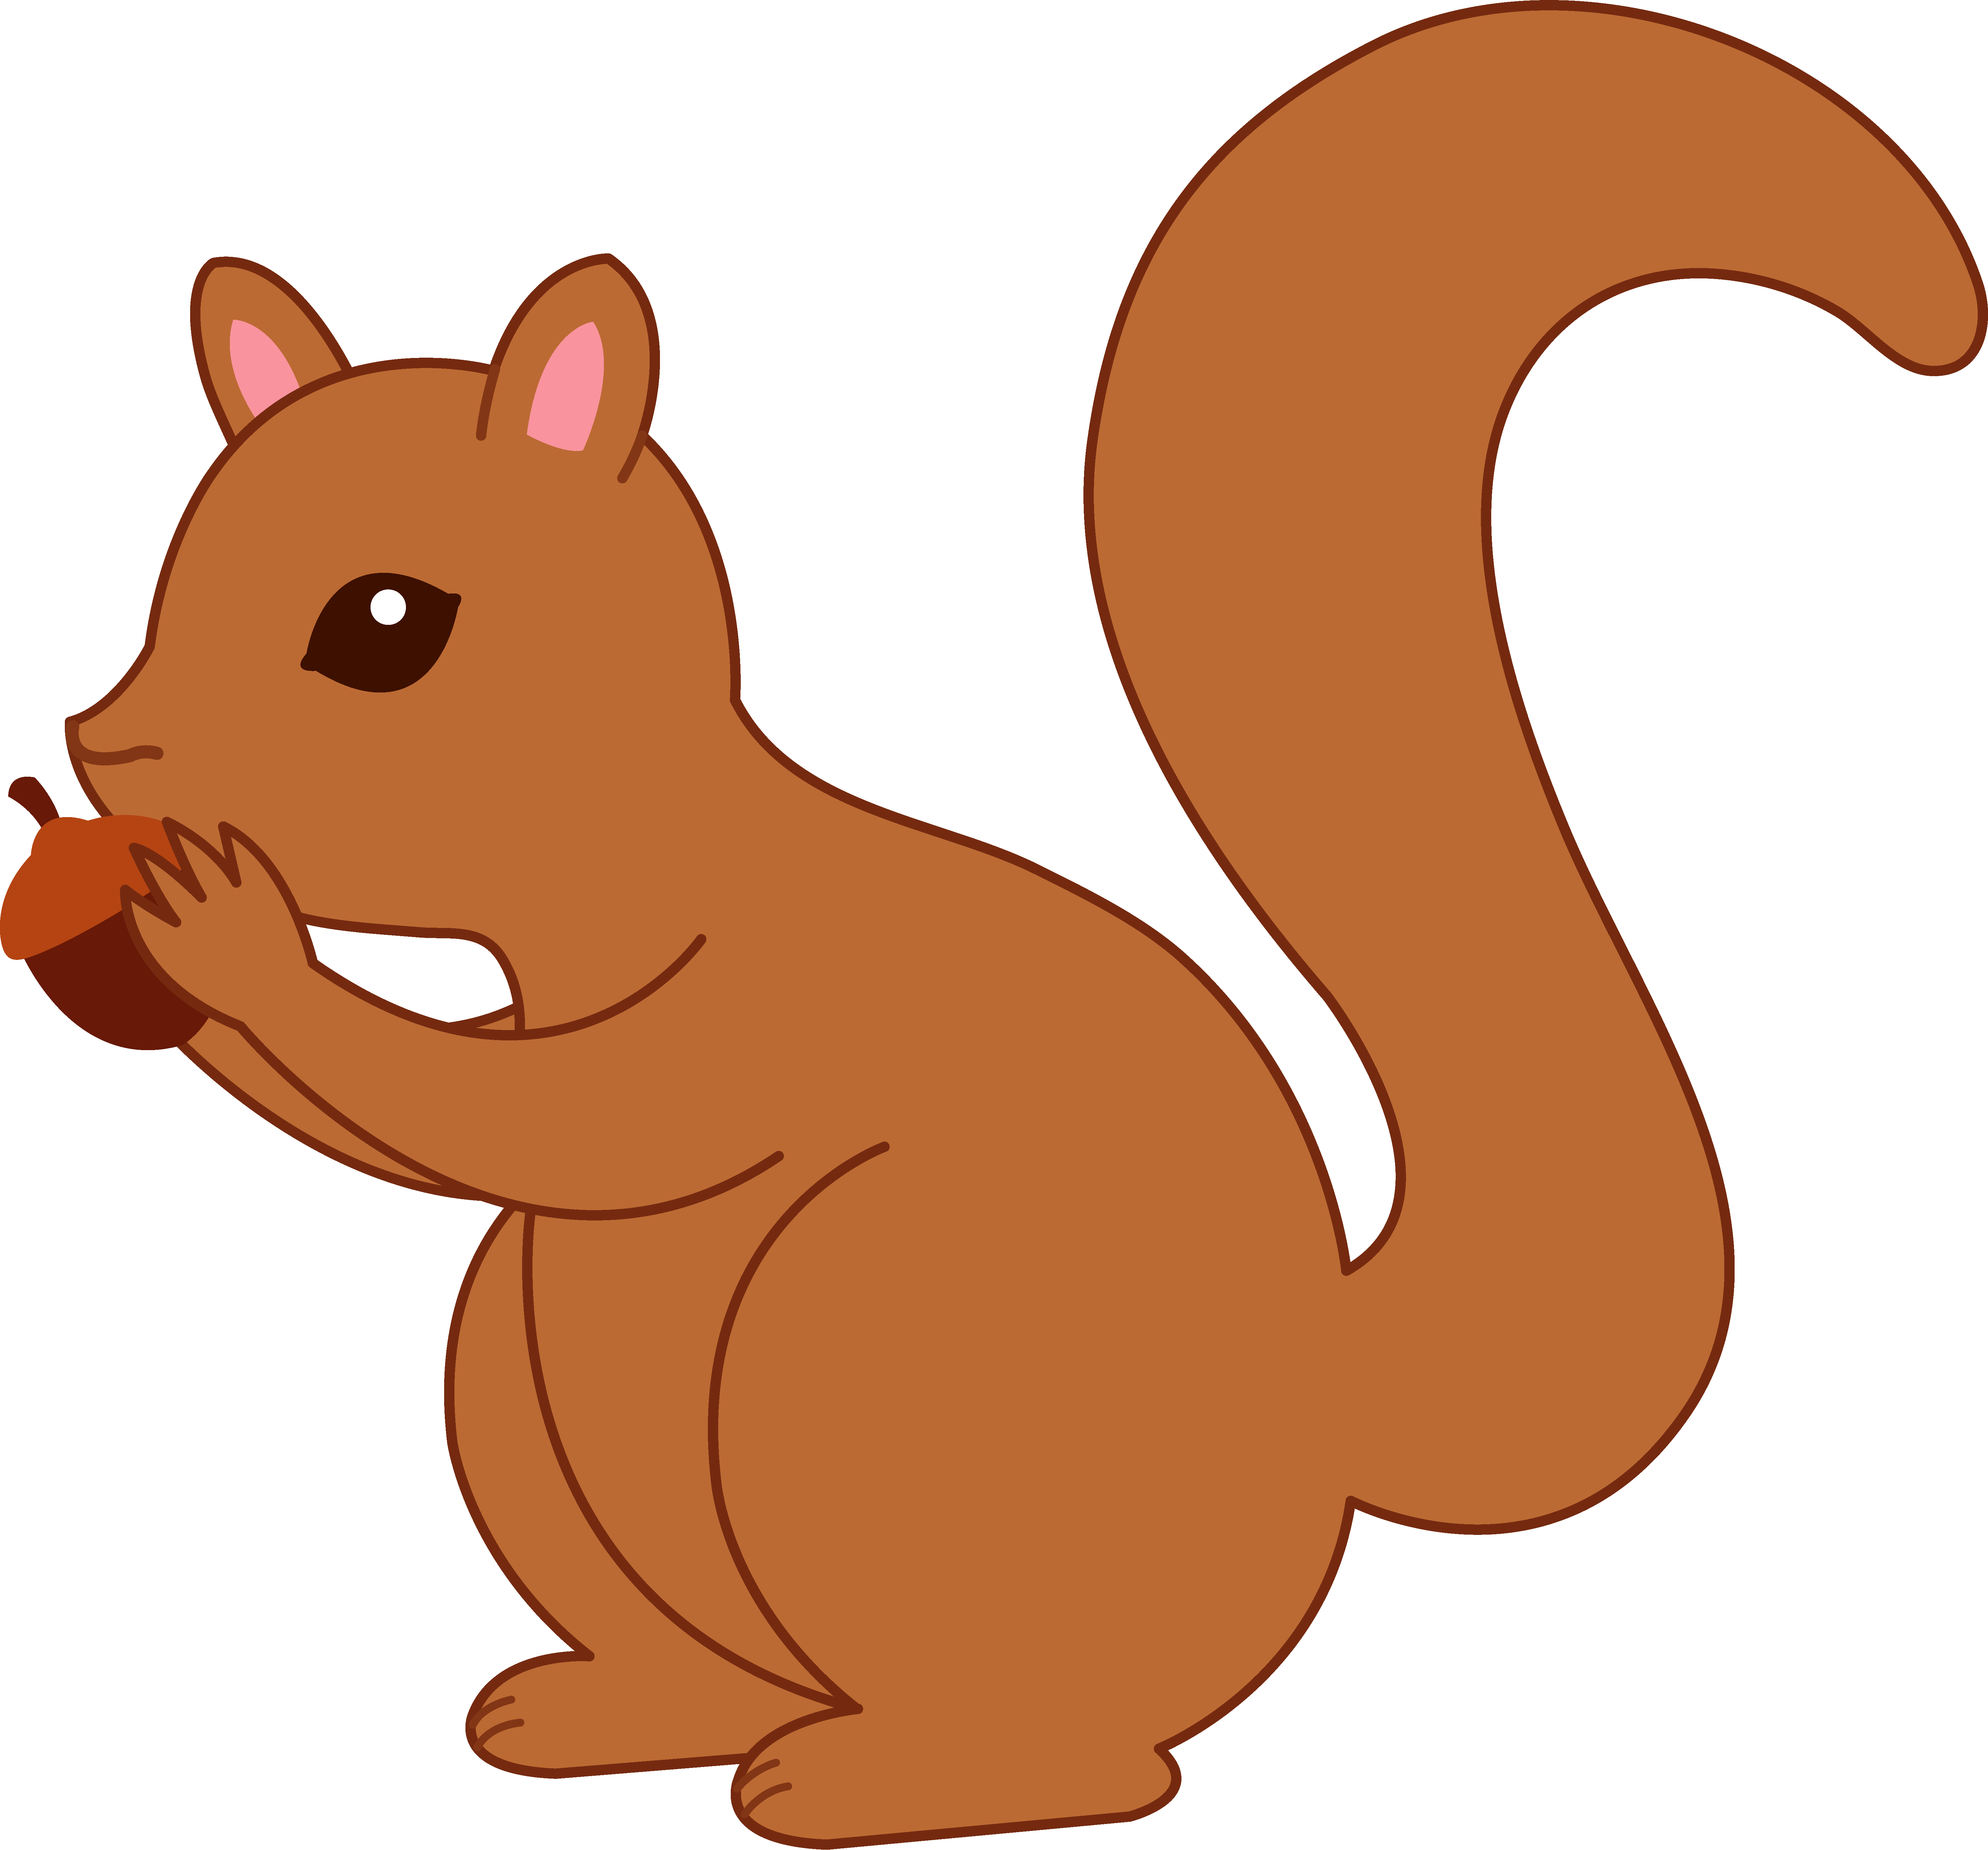 Squirrel Cartoon Pictures - ClipArt Best